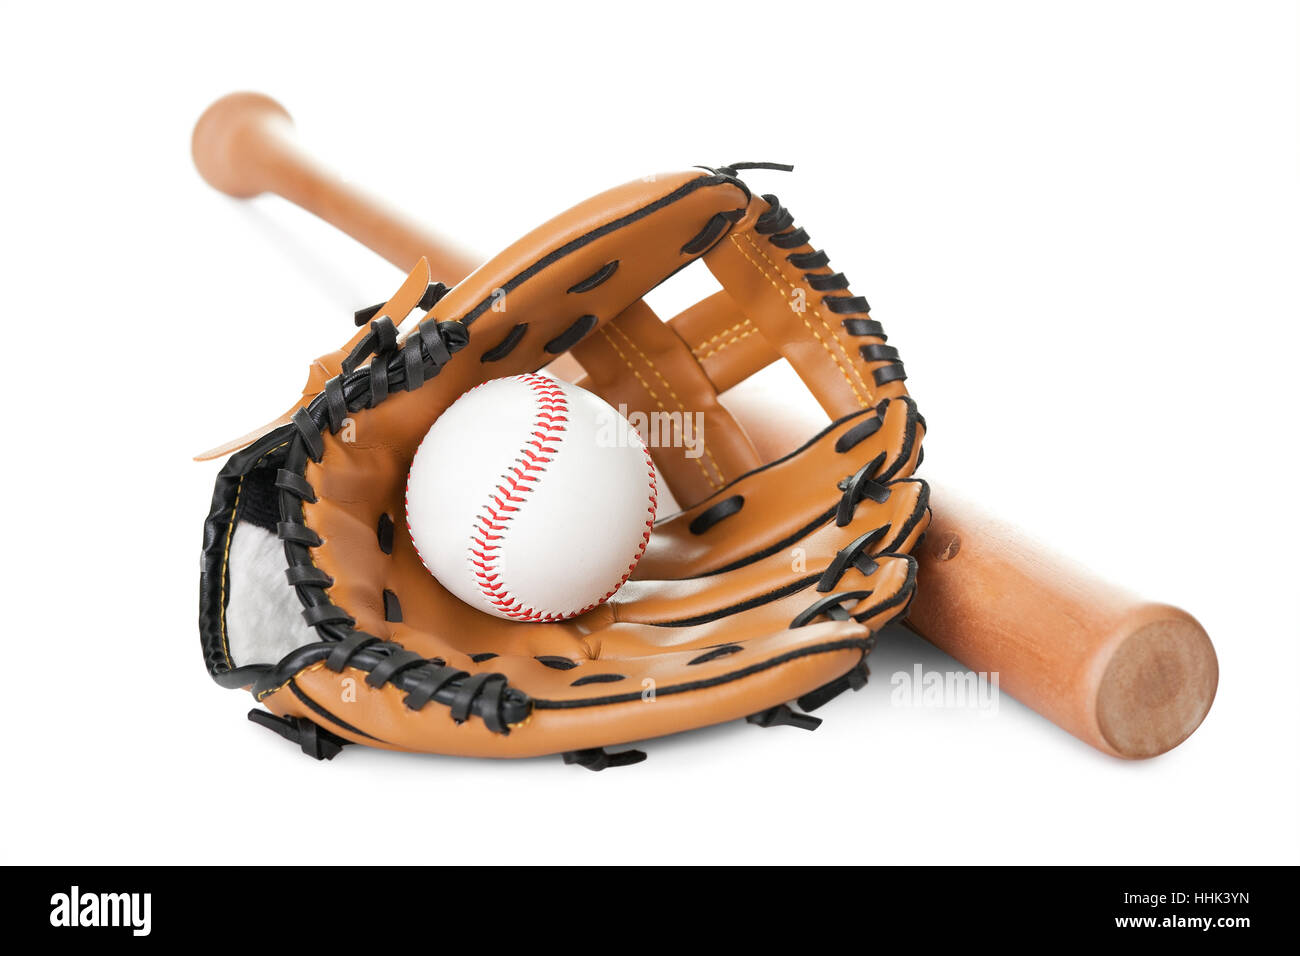 ball, glove, isolate, bat, baseball, backdrop, background, white, object, spare Stock Photo